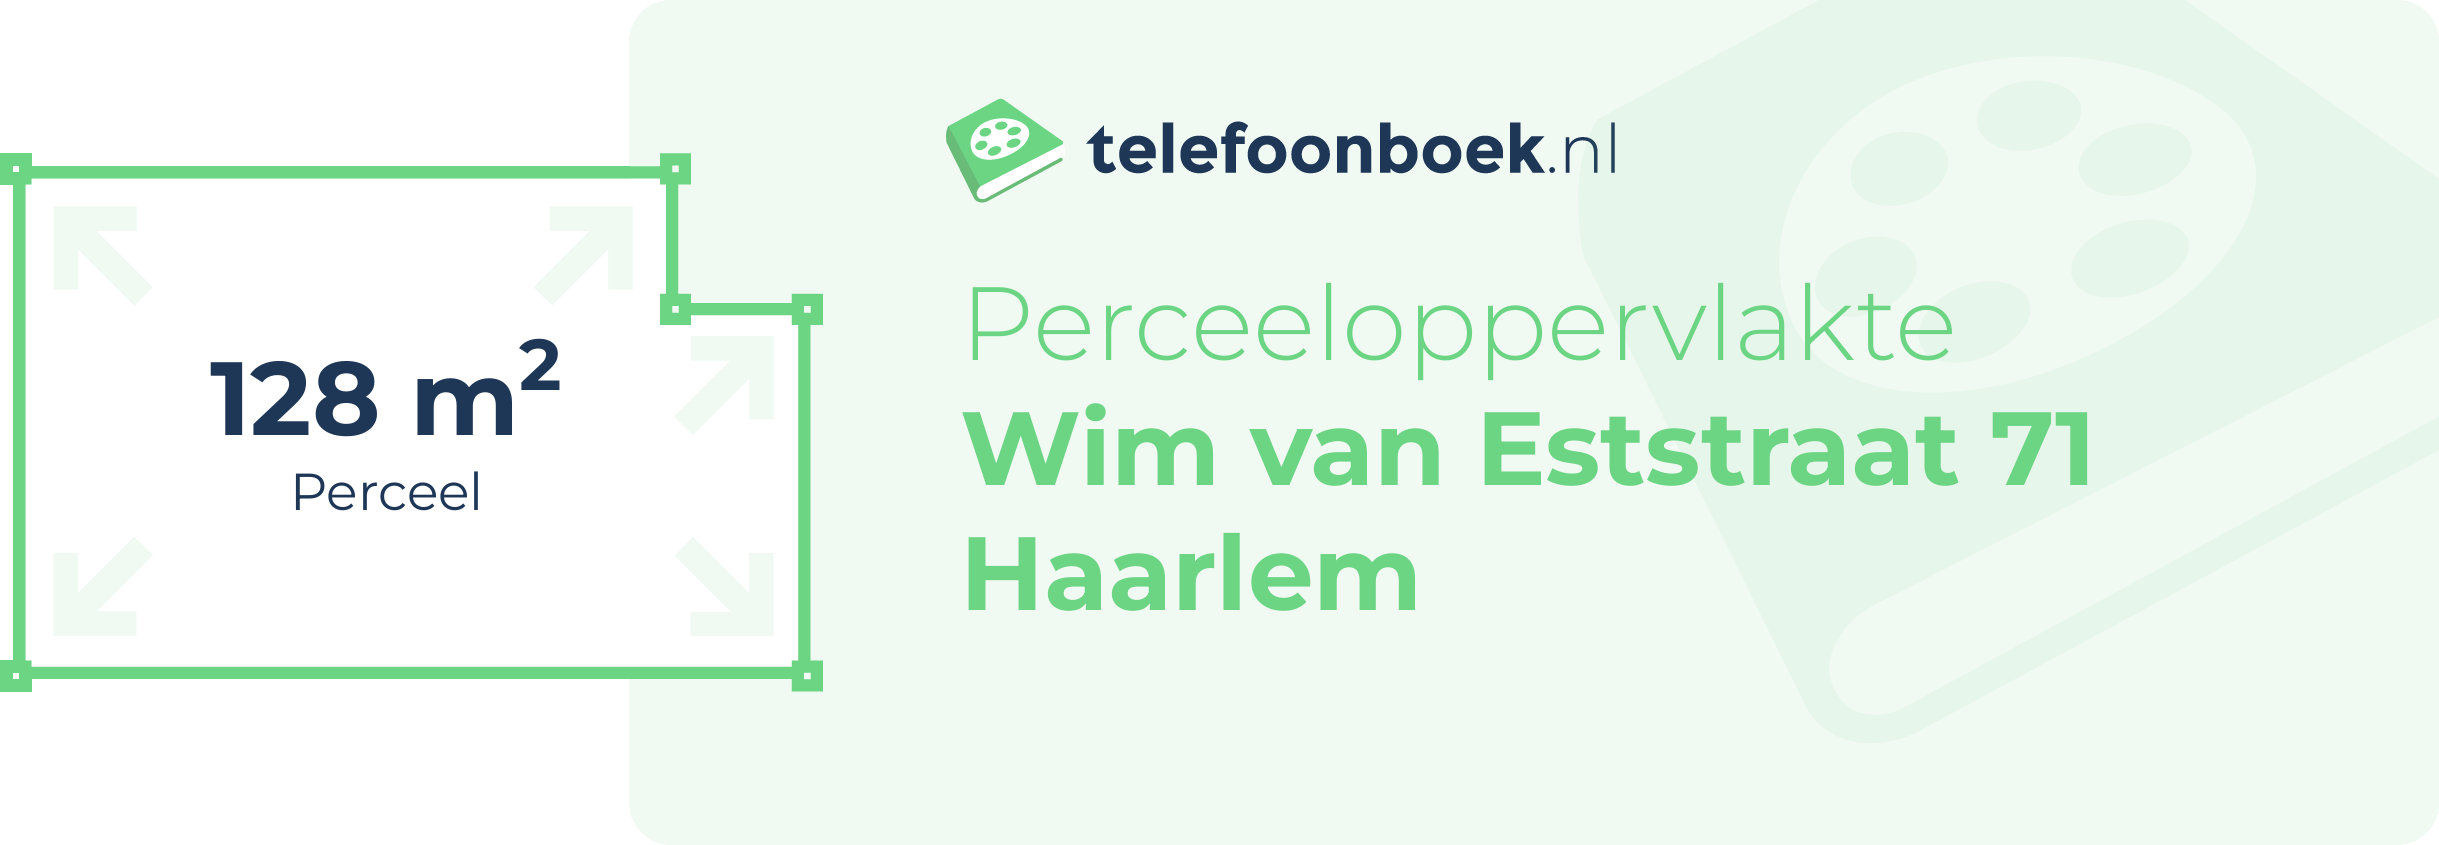 Perceeloppervlakte Wim Van Eststraat 71 Haarlem